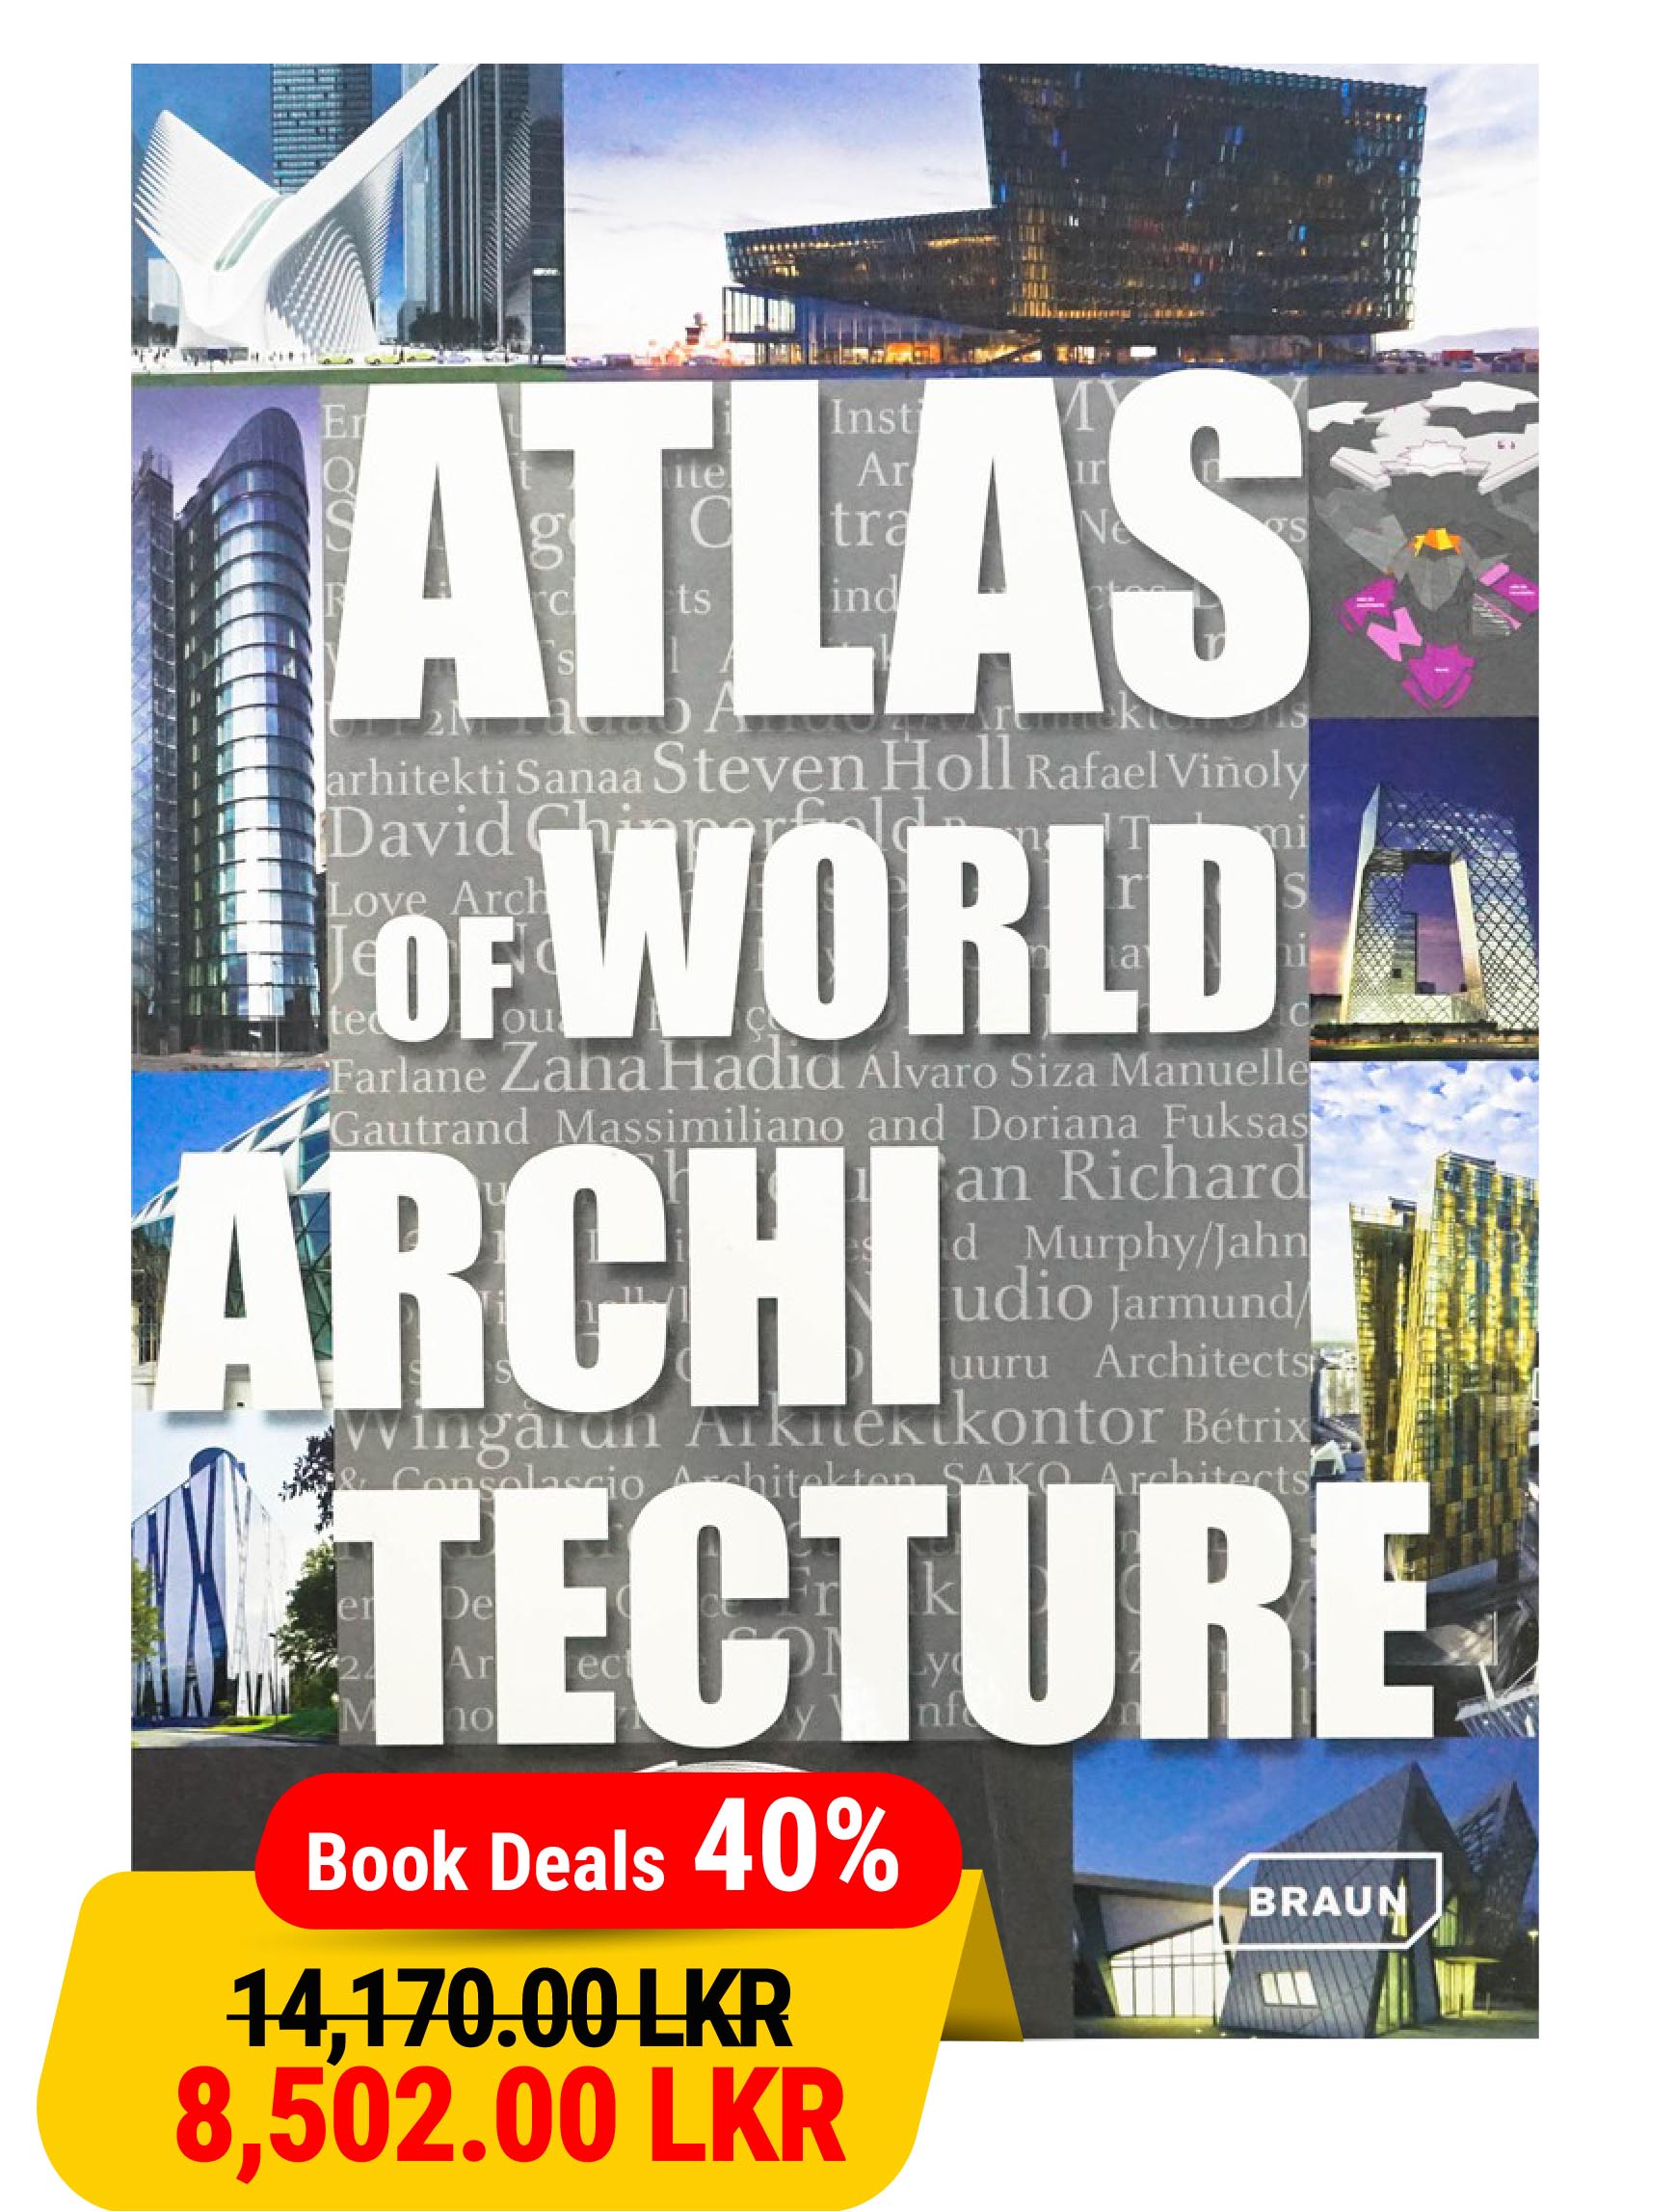 Atlas of World Architecture